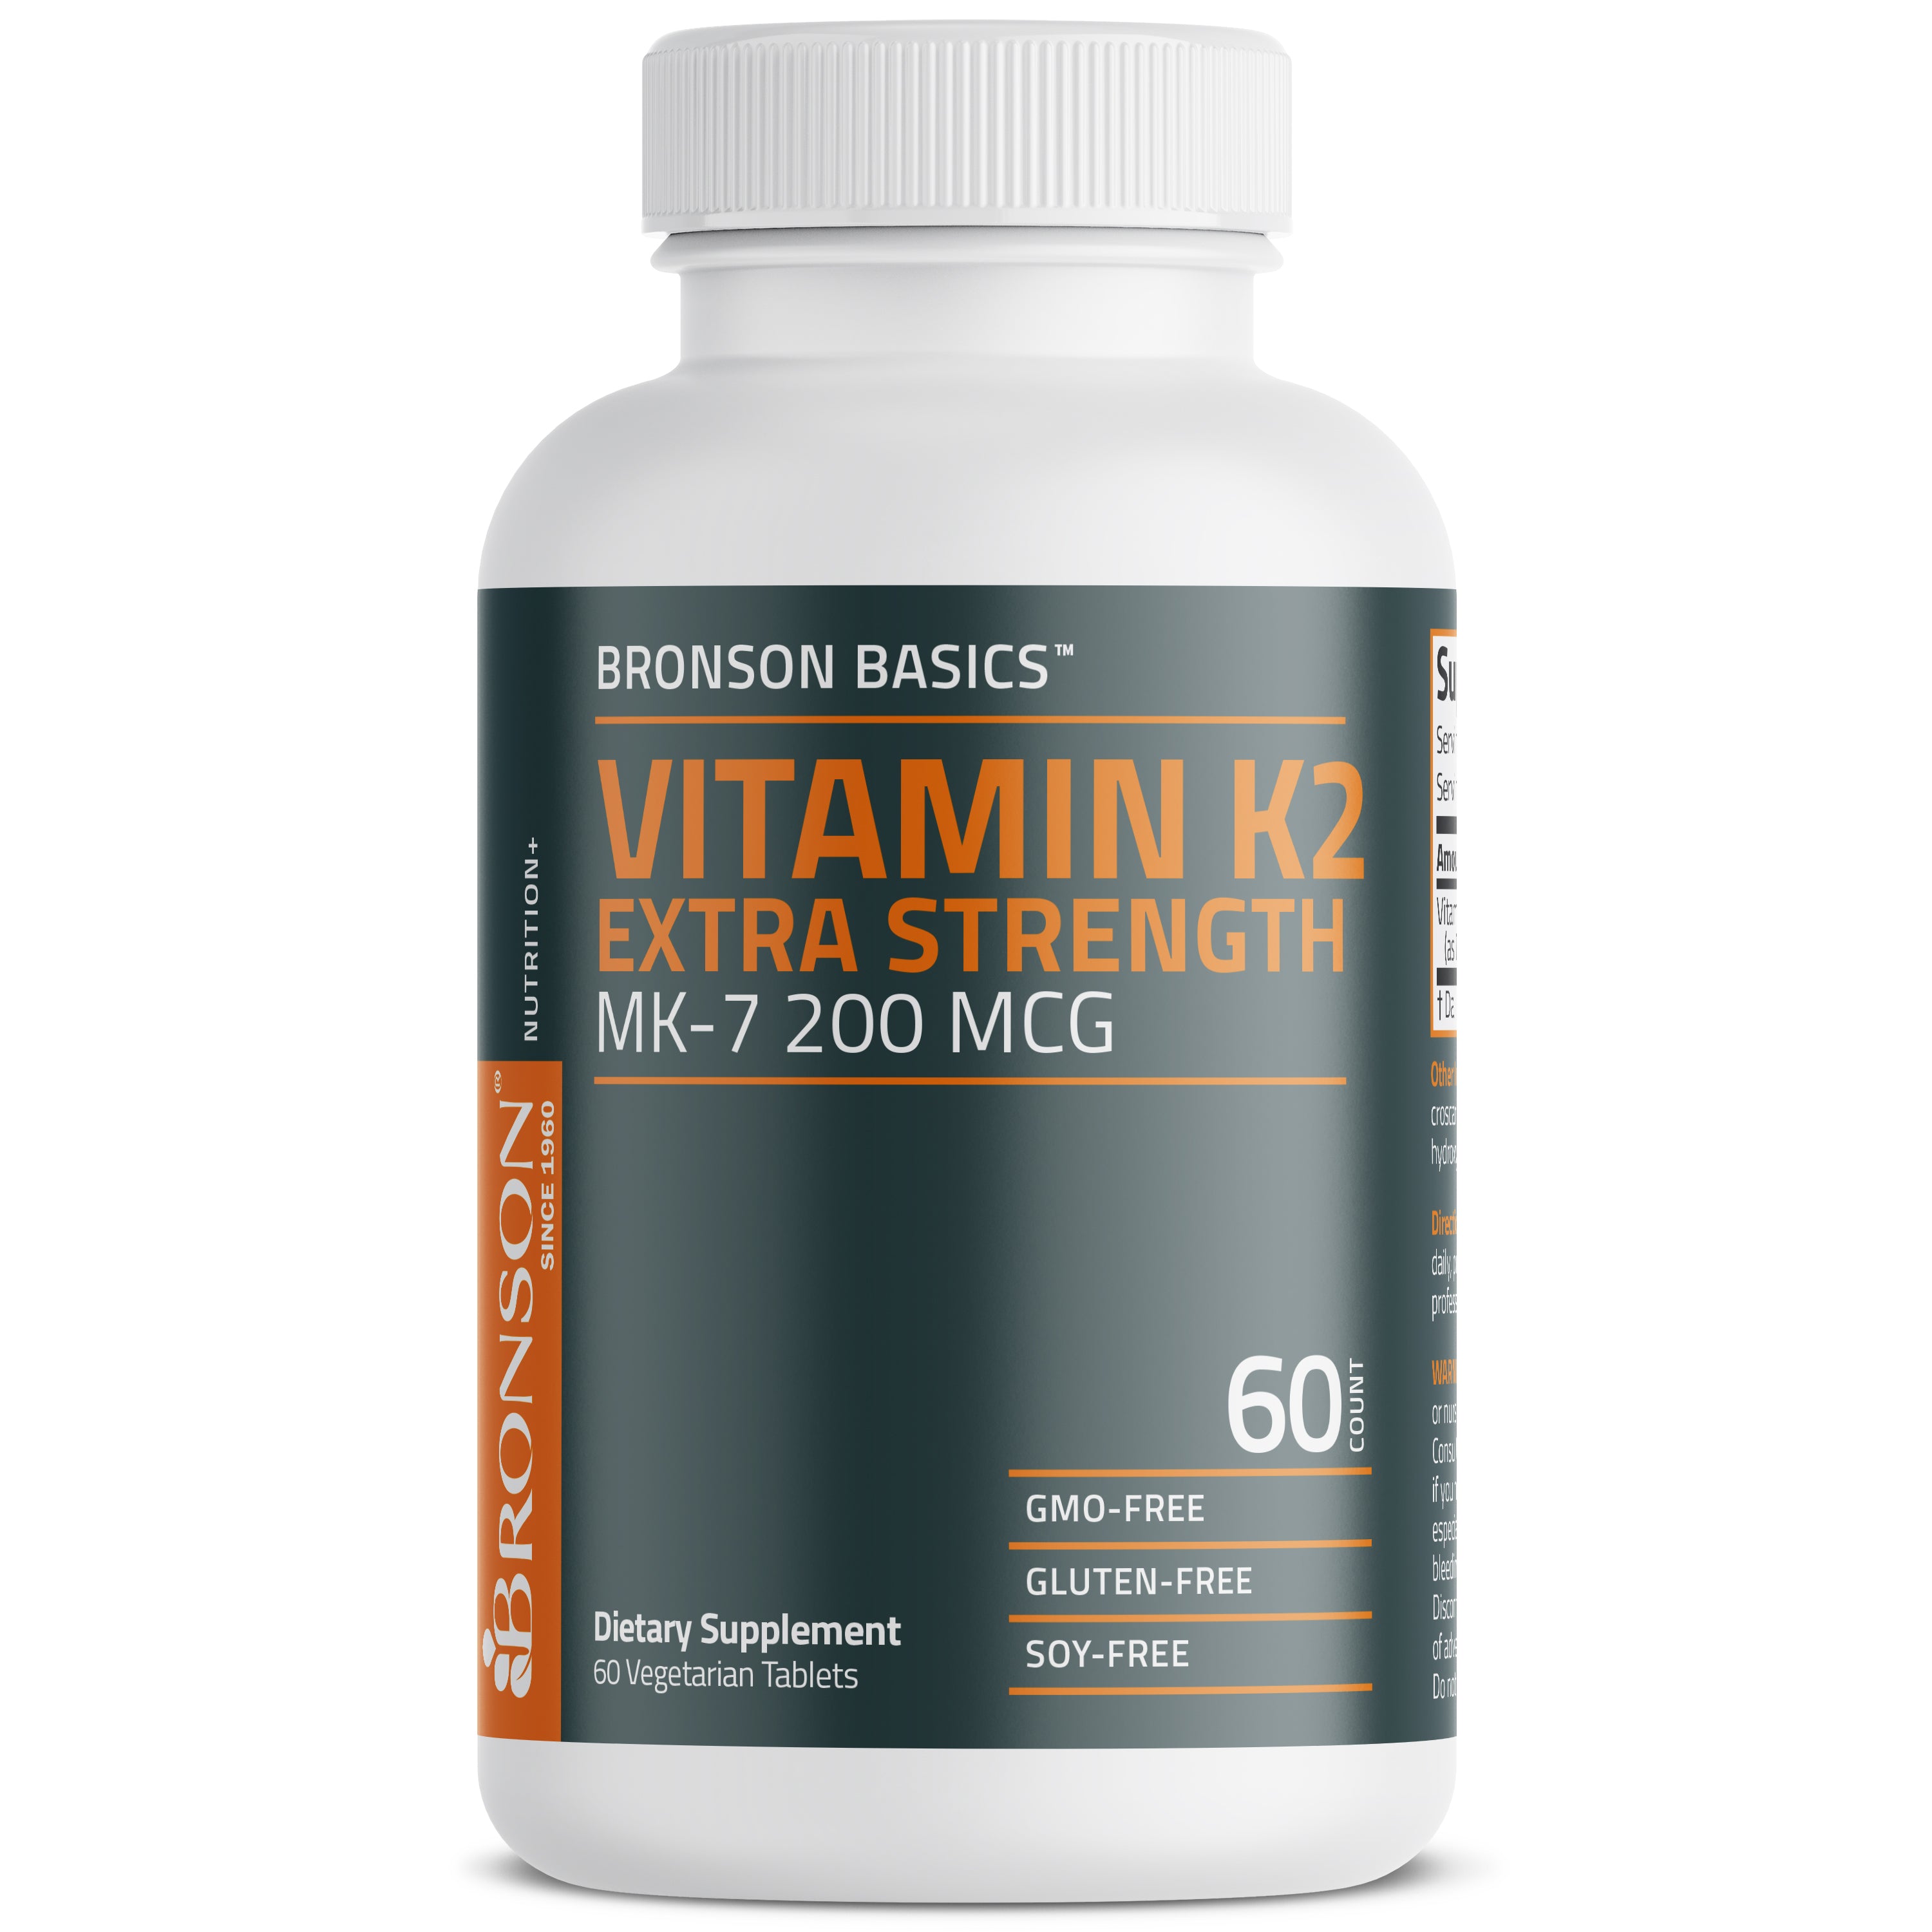 Vitamin K2 Extra Strength MK-7 200 MCG view 2 of 6